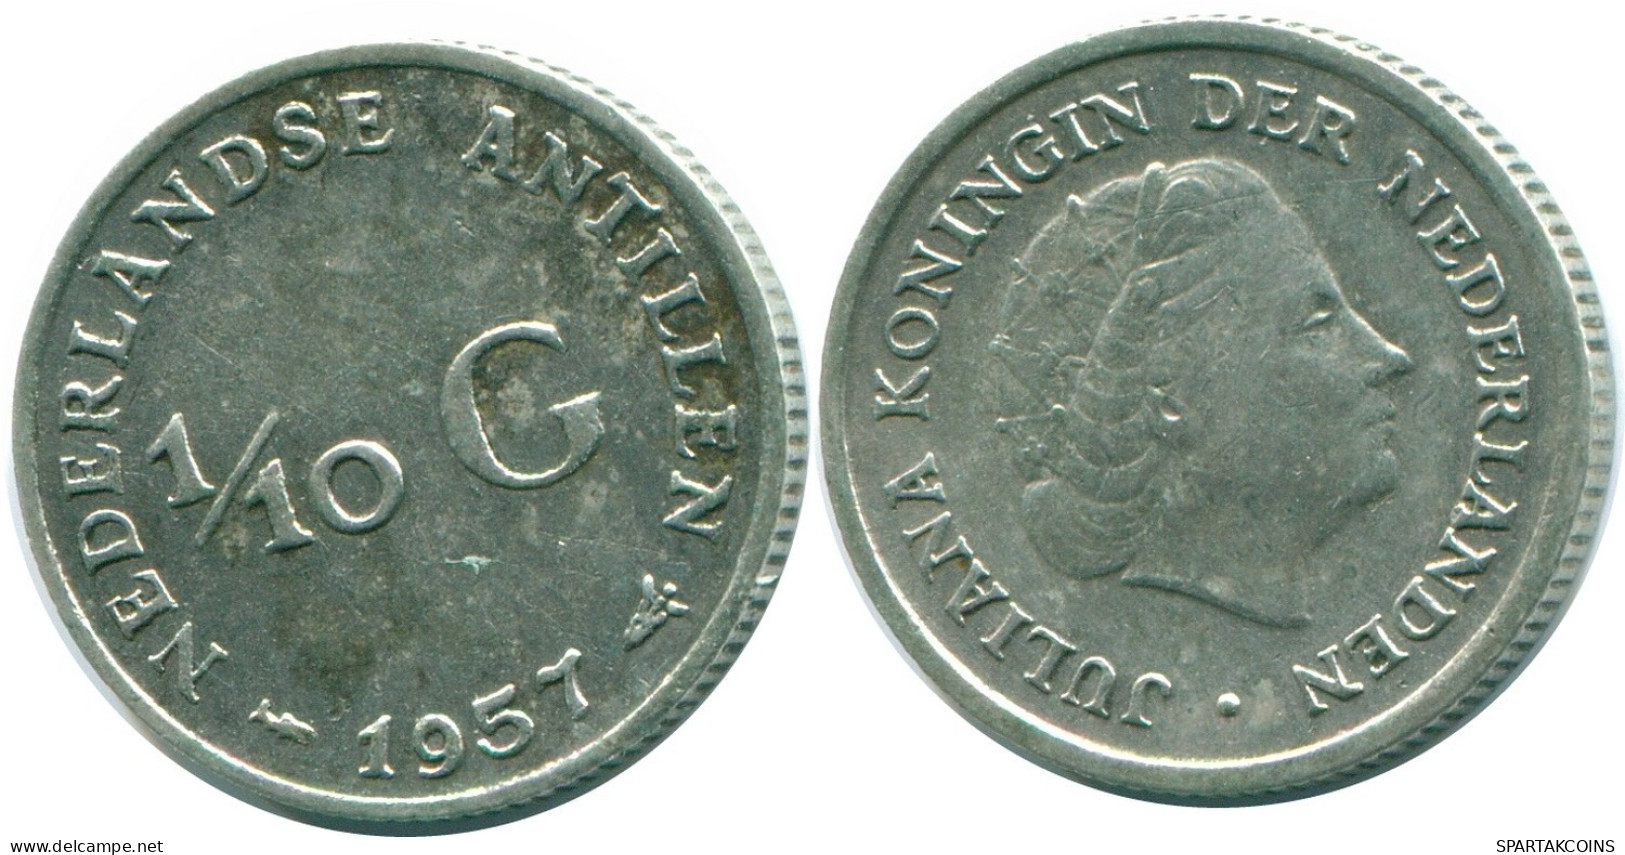 1/10 GULDEN 1957 NETHERLANDS ANTILLES SILVER Colonial Coin #NL12131.3.U.A - Niederländische Antillen